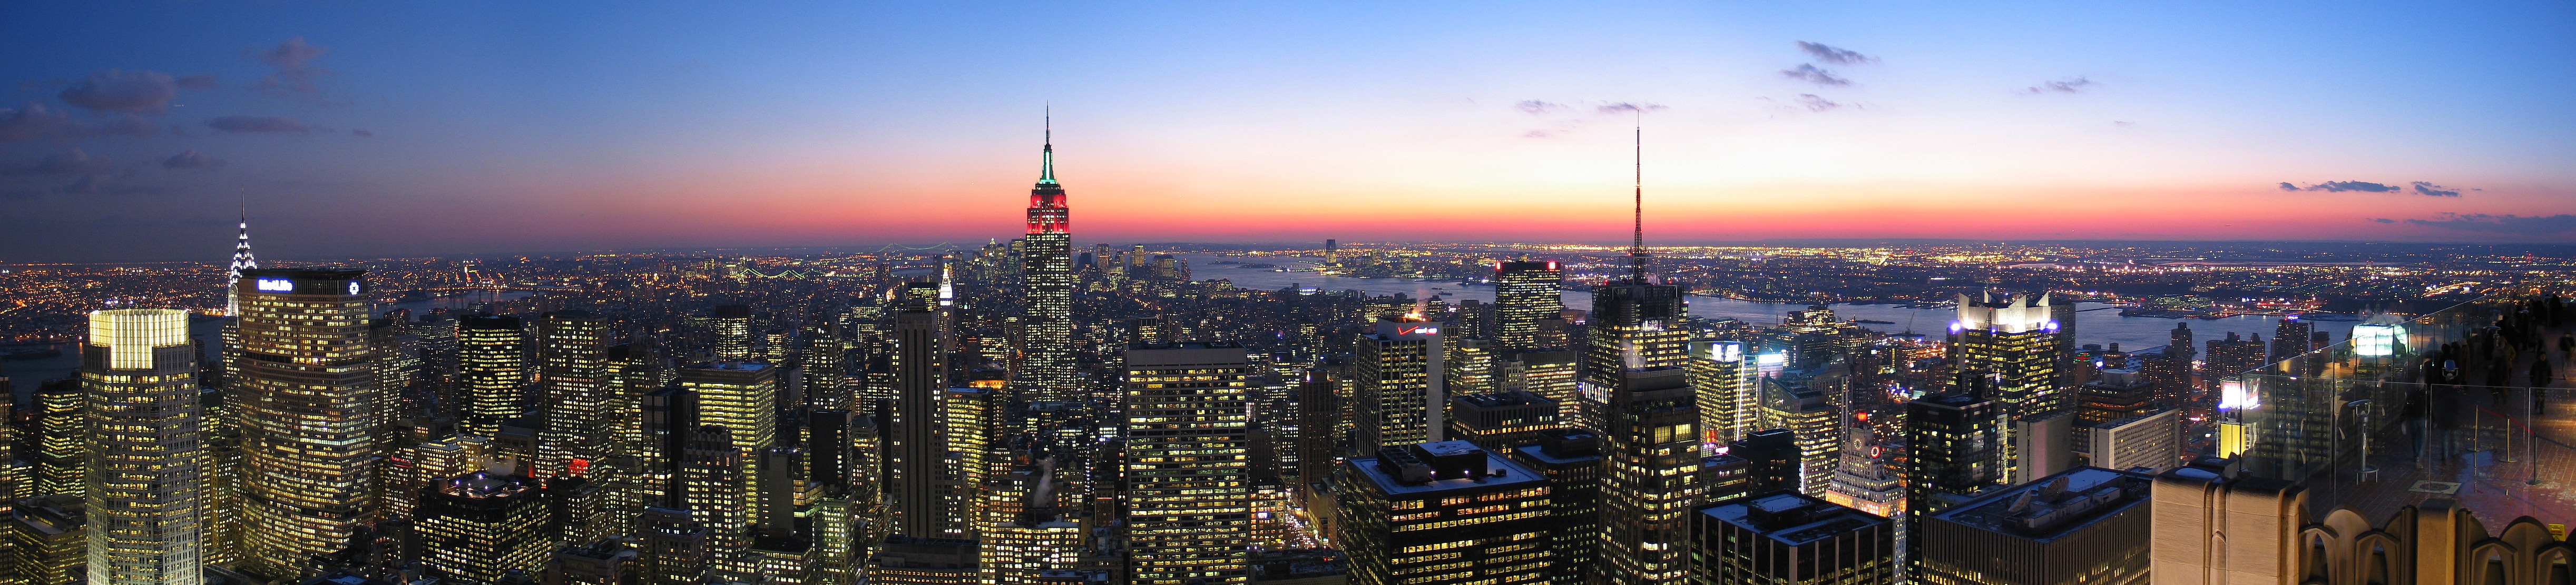 A skyline of New York City at Night